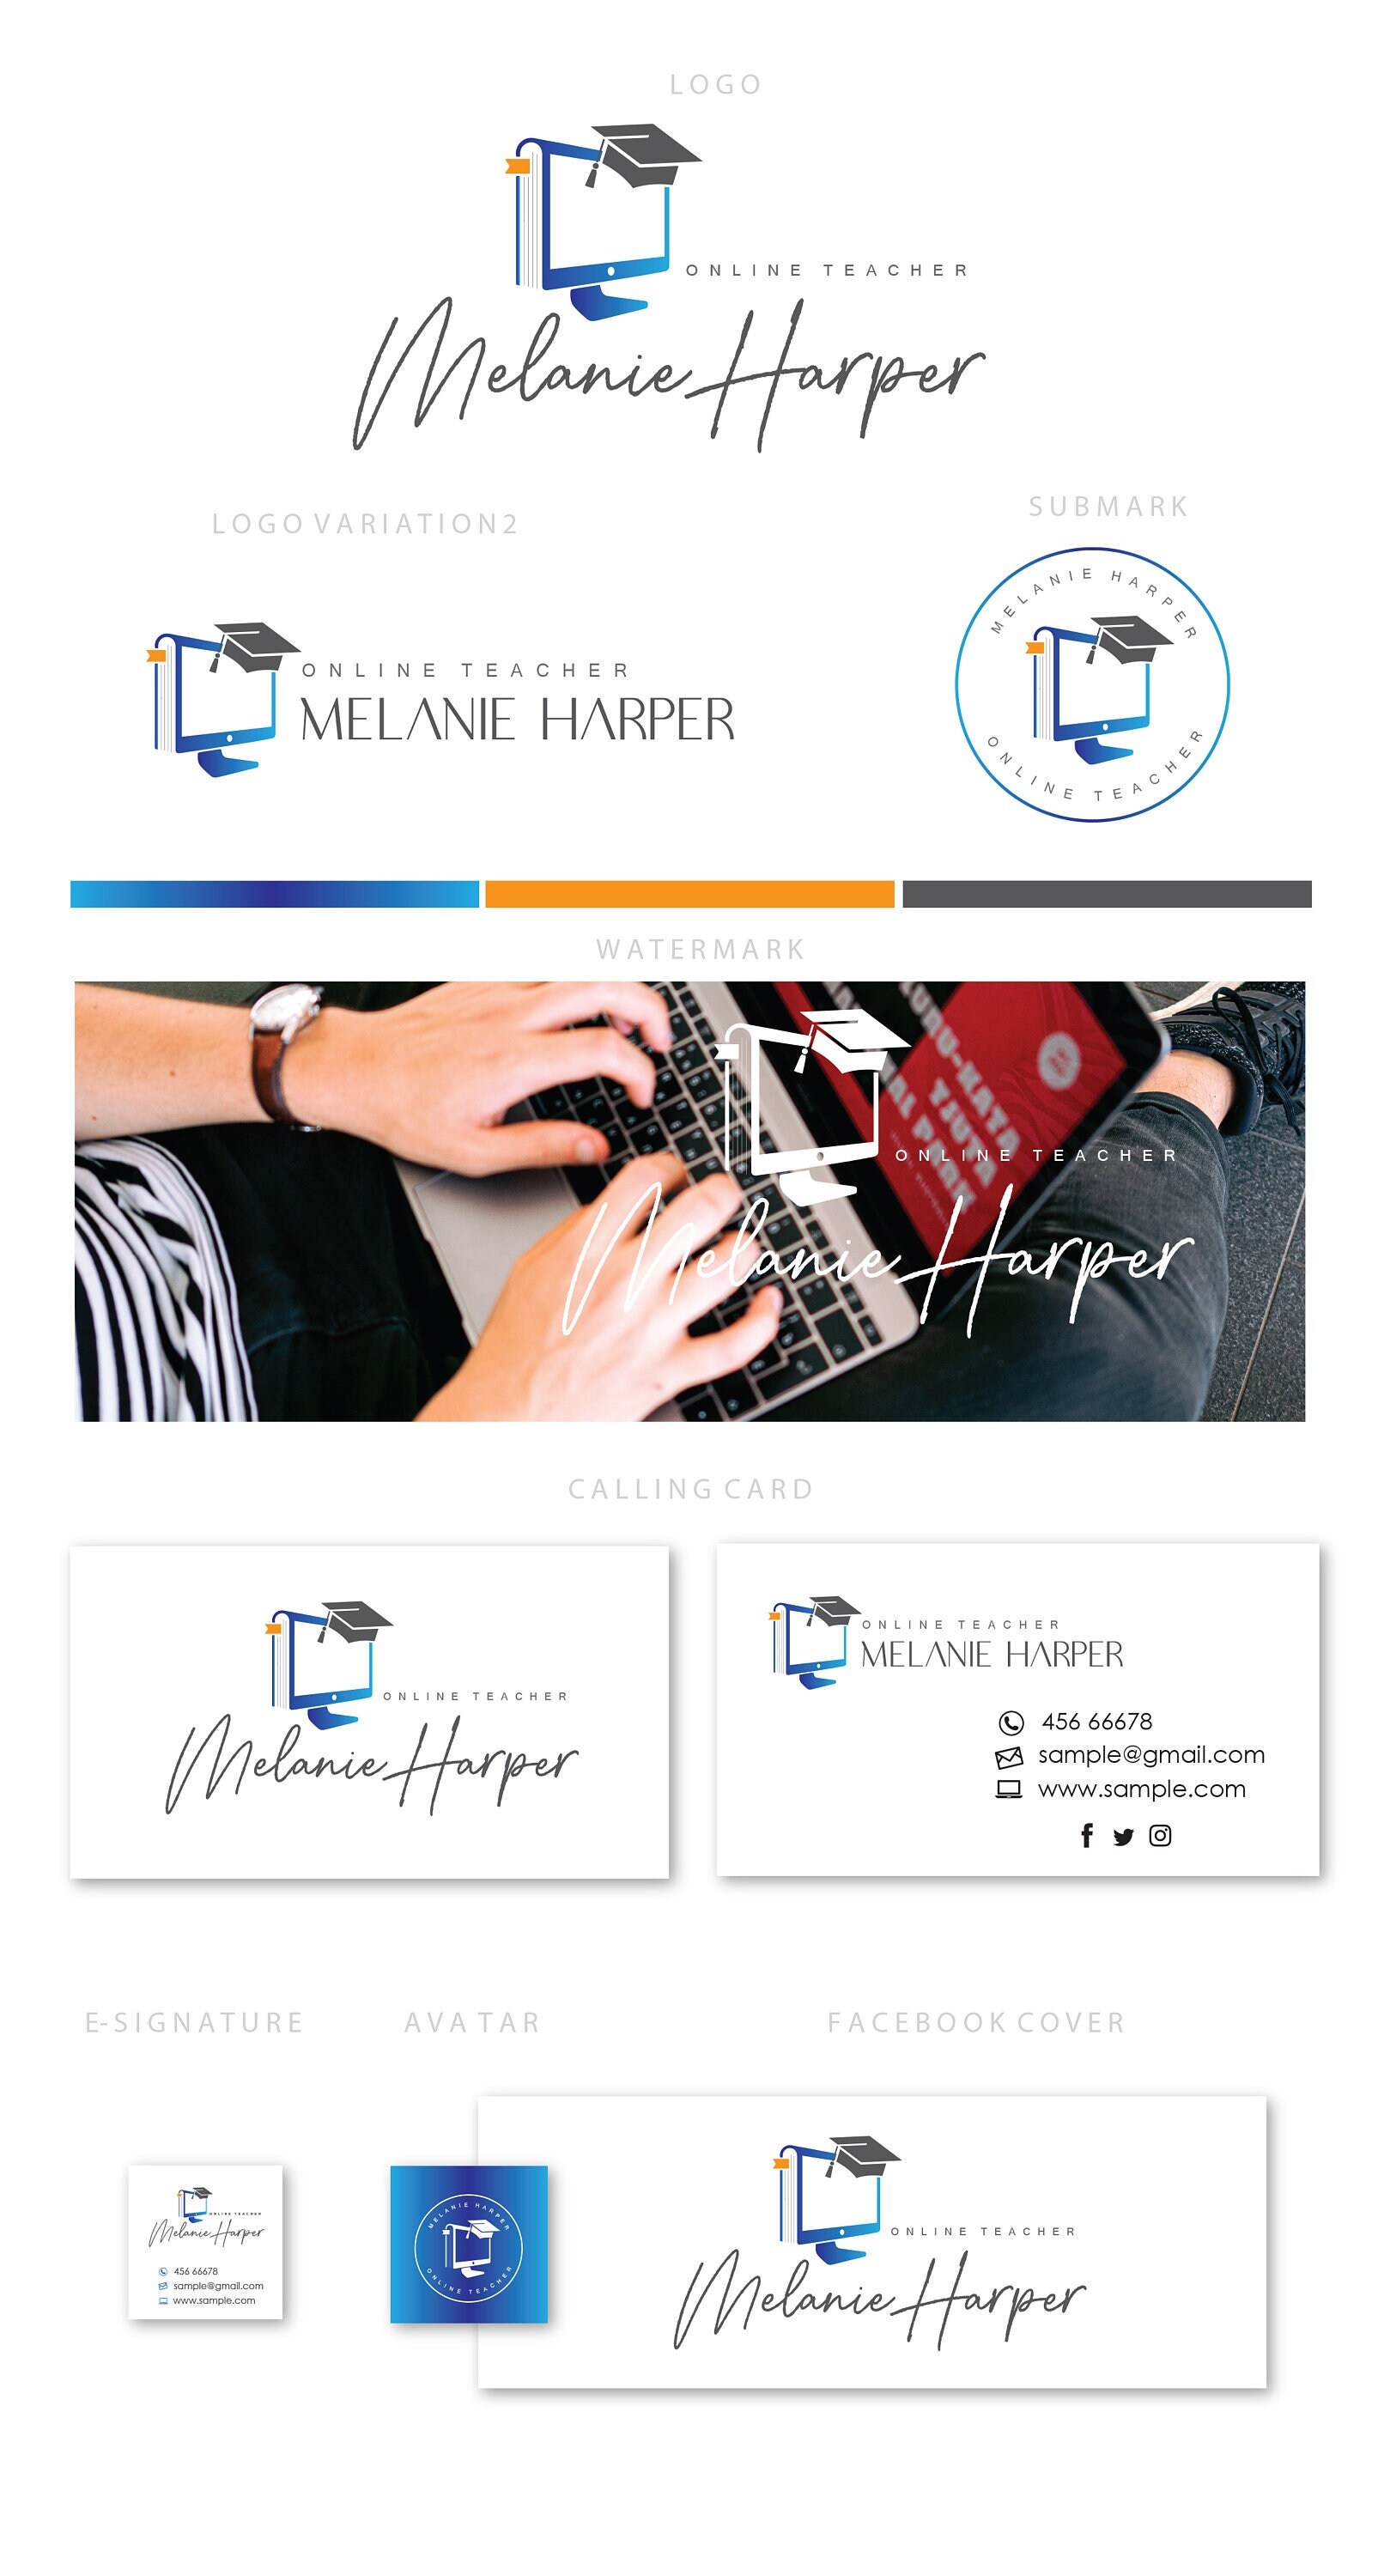 Home lessons Branding materials teachers Virtual assistant Techer logo design Branding kit Coacher 154 Online classroom branding